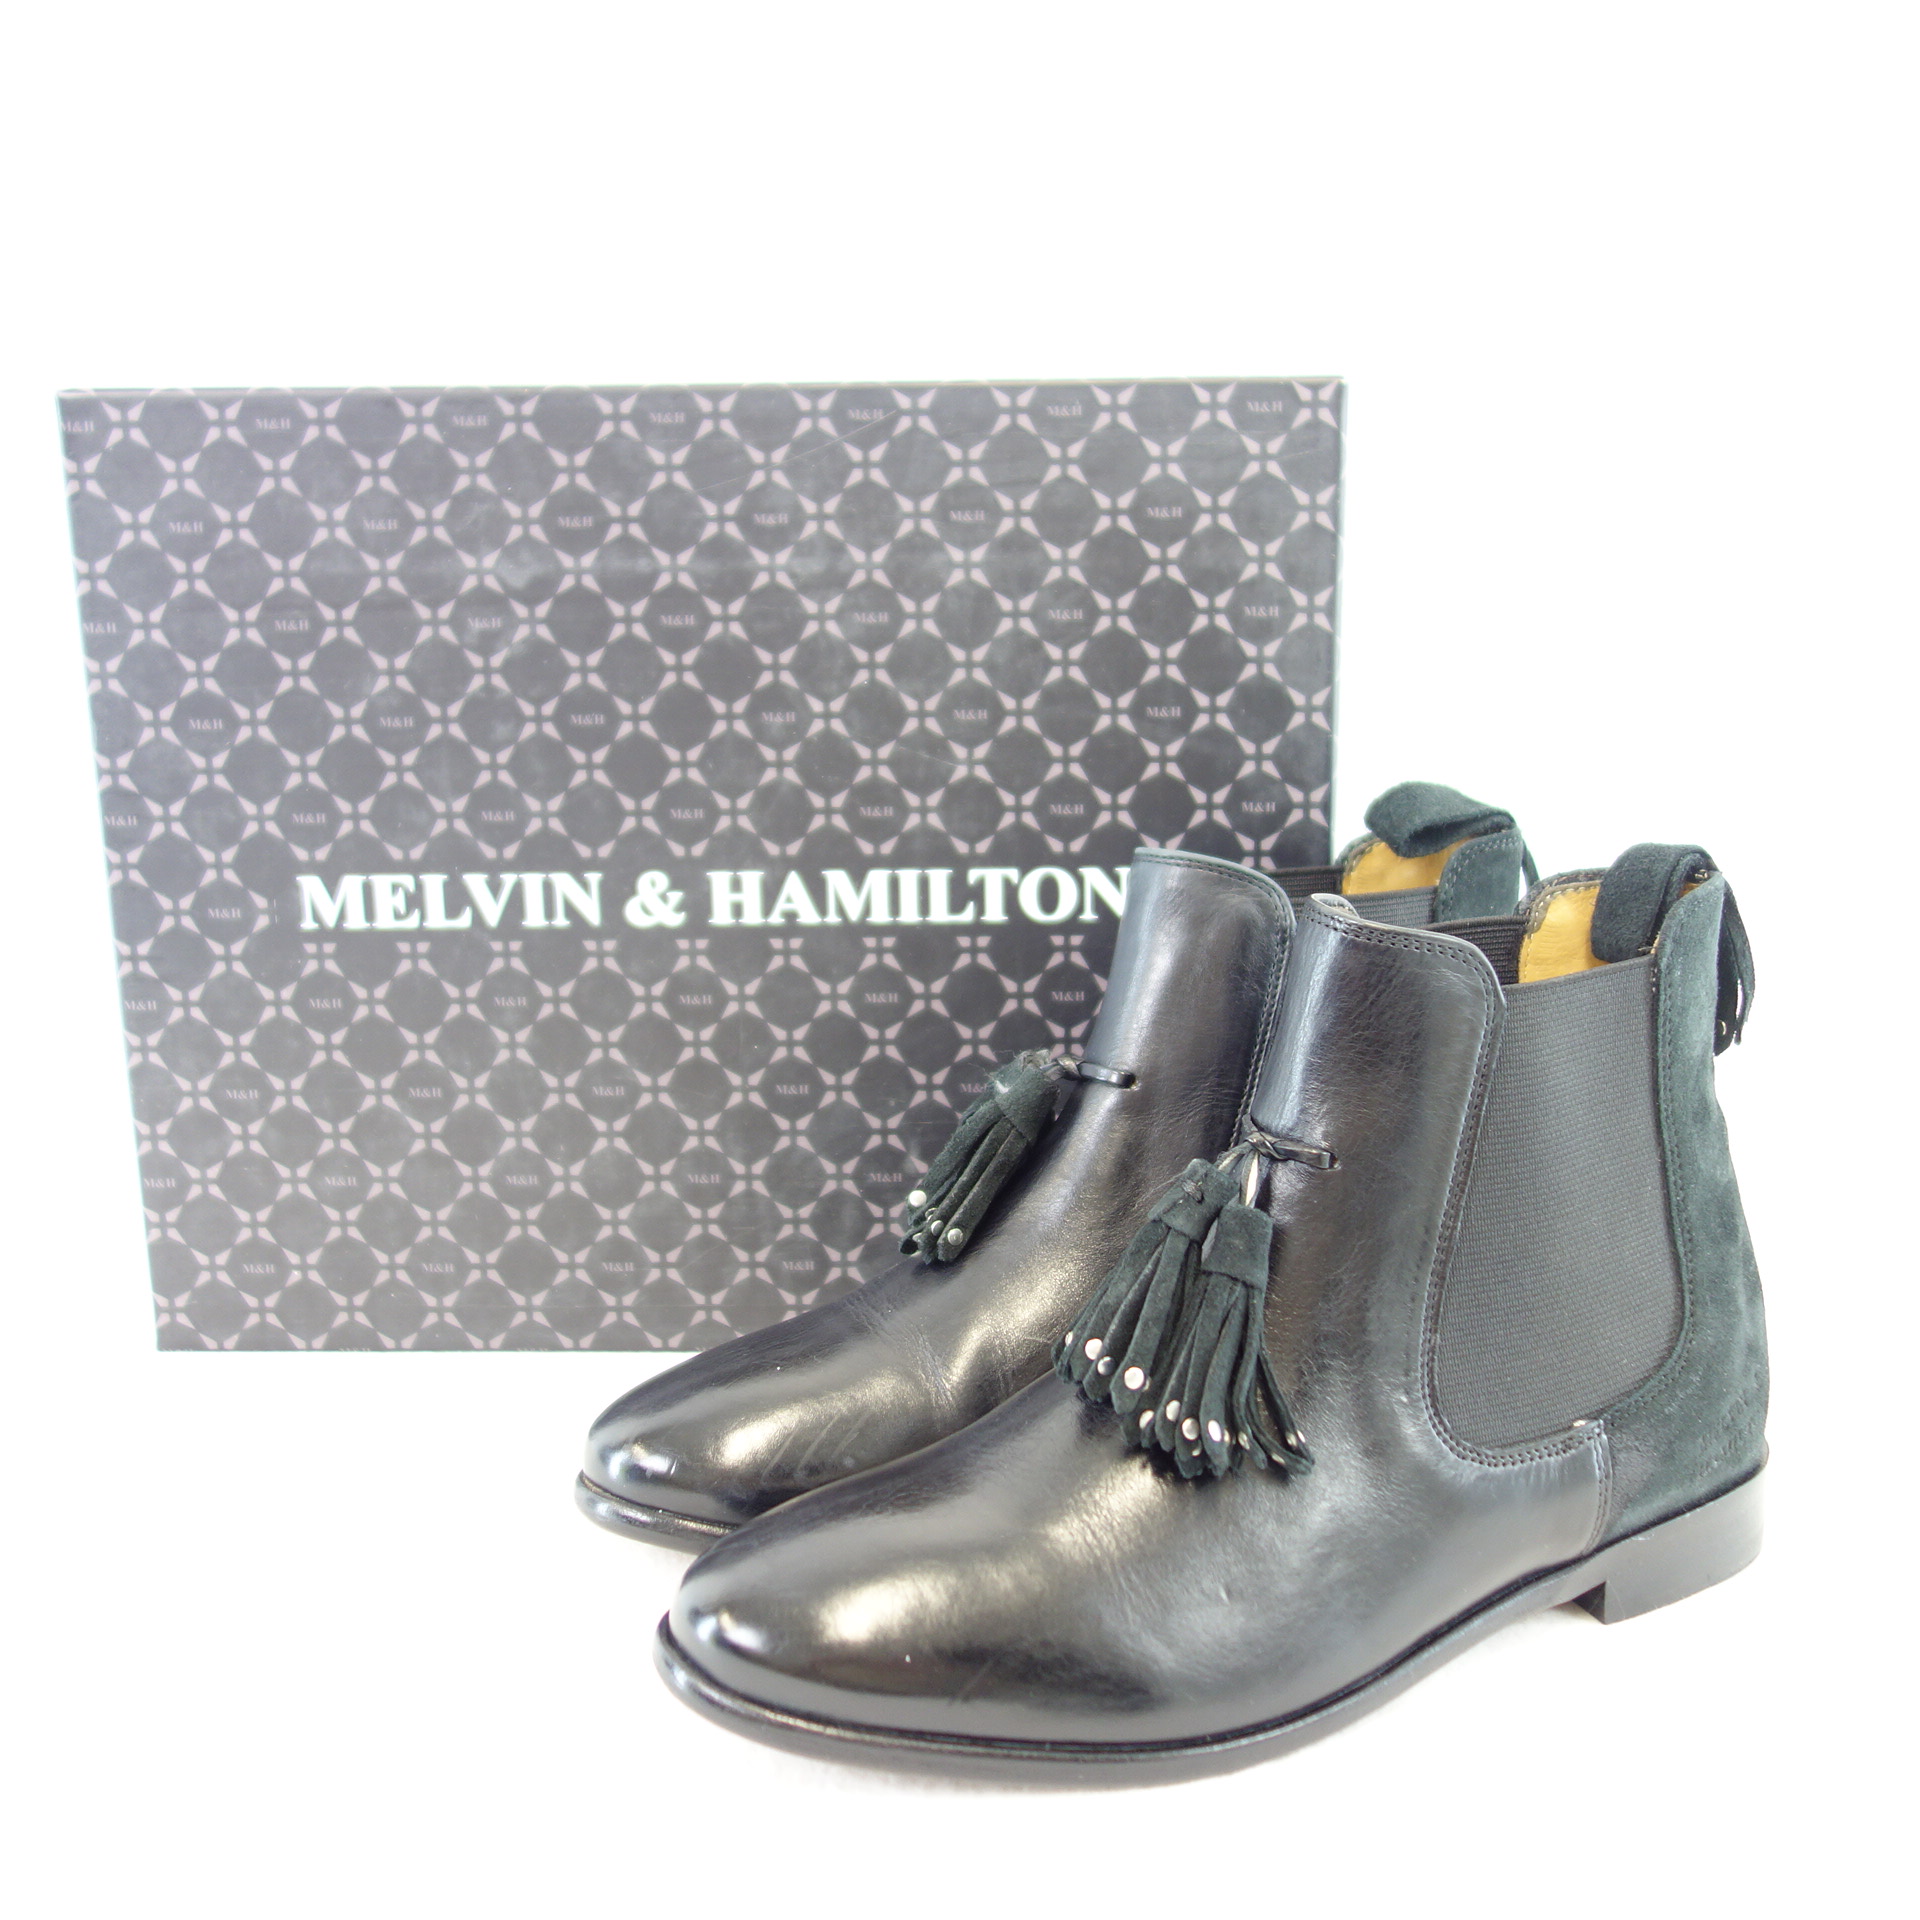 MELVIN & HAMILTON Damen Schuhe Stiefeletten Chelsea Boots Stiefel Schwarz Leder Daisy